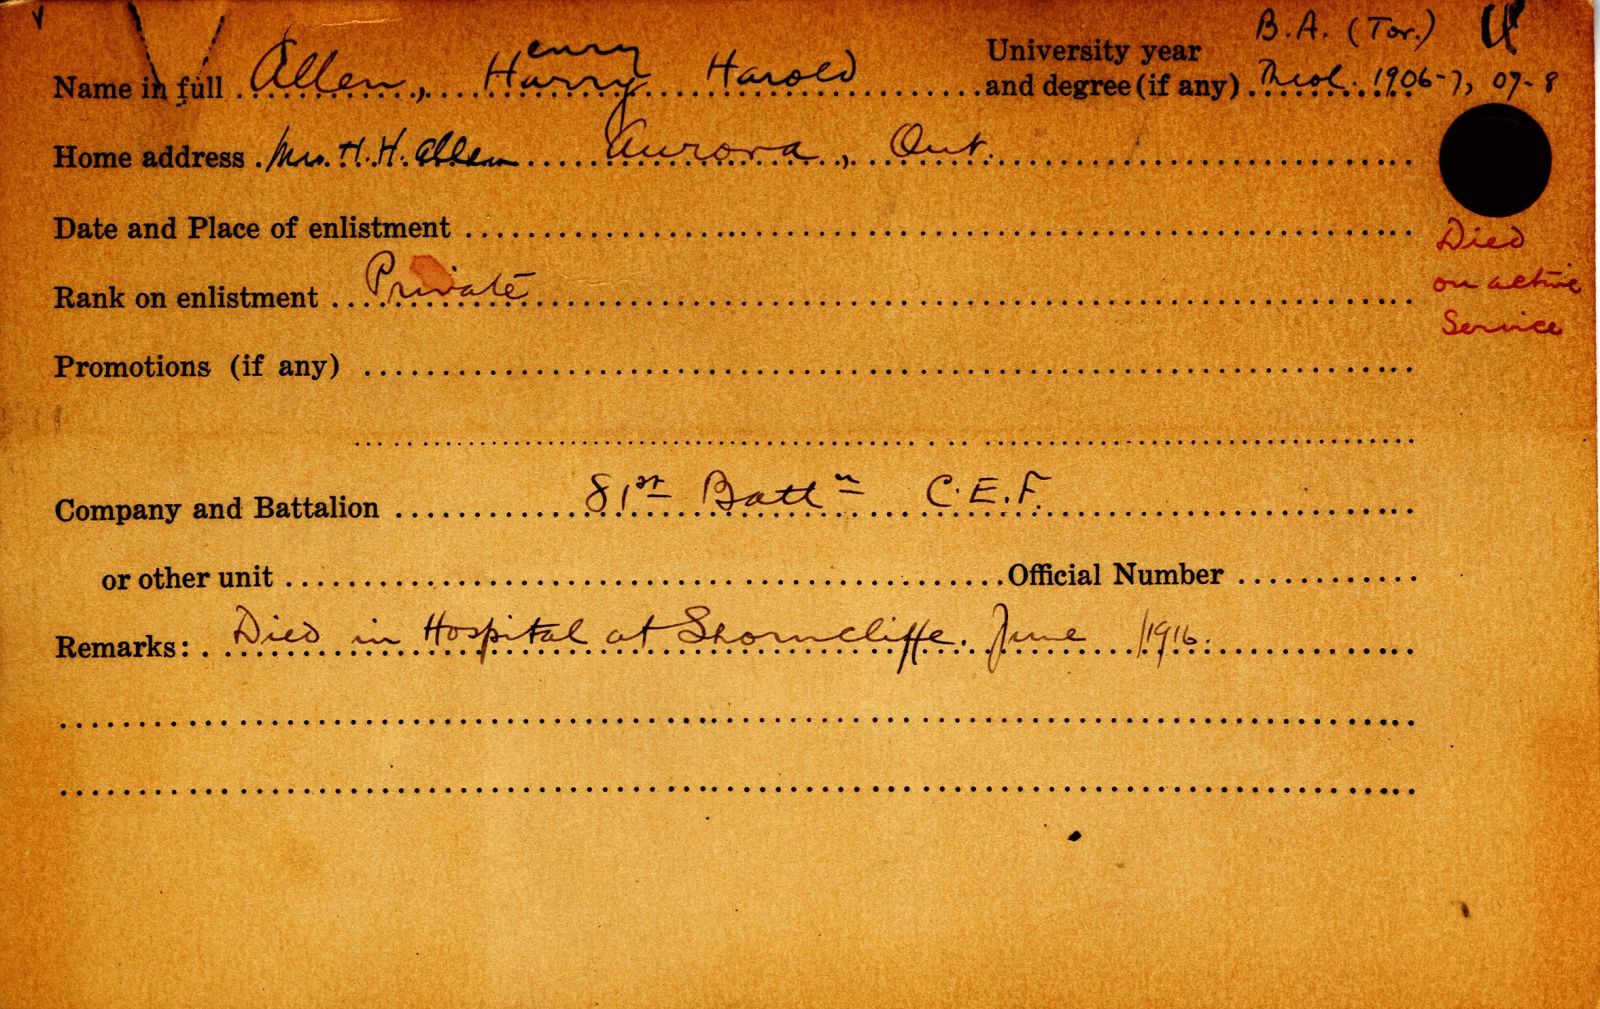 University Military Record of Rev. Henry Harold Allen